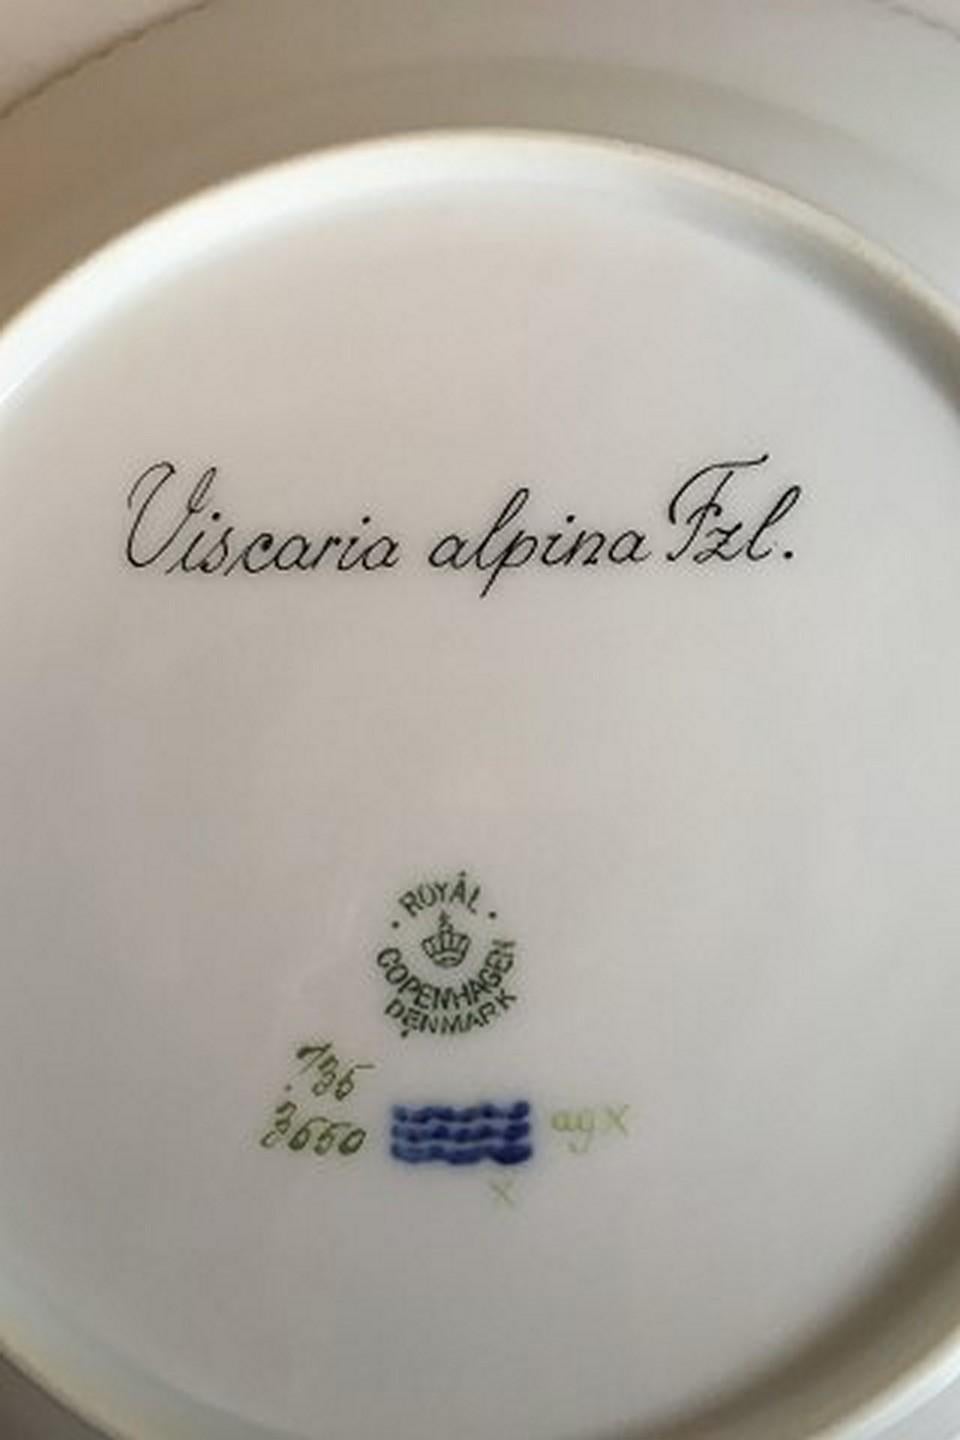 Royal Copenhagen Flora Danica lunch plate #735/3550.
Latin name: Viscaria alpina Fzl.
Measures: 22 cm / 8 21/32